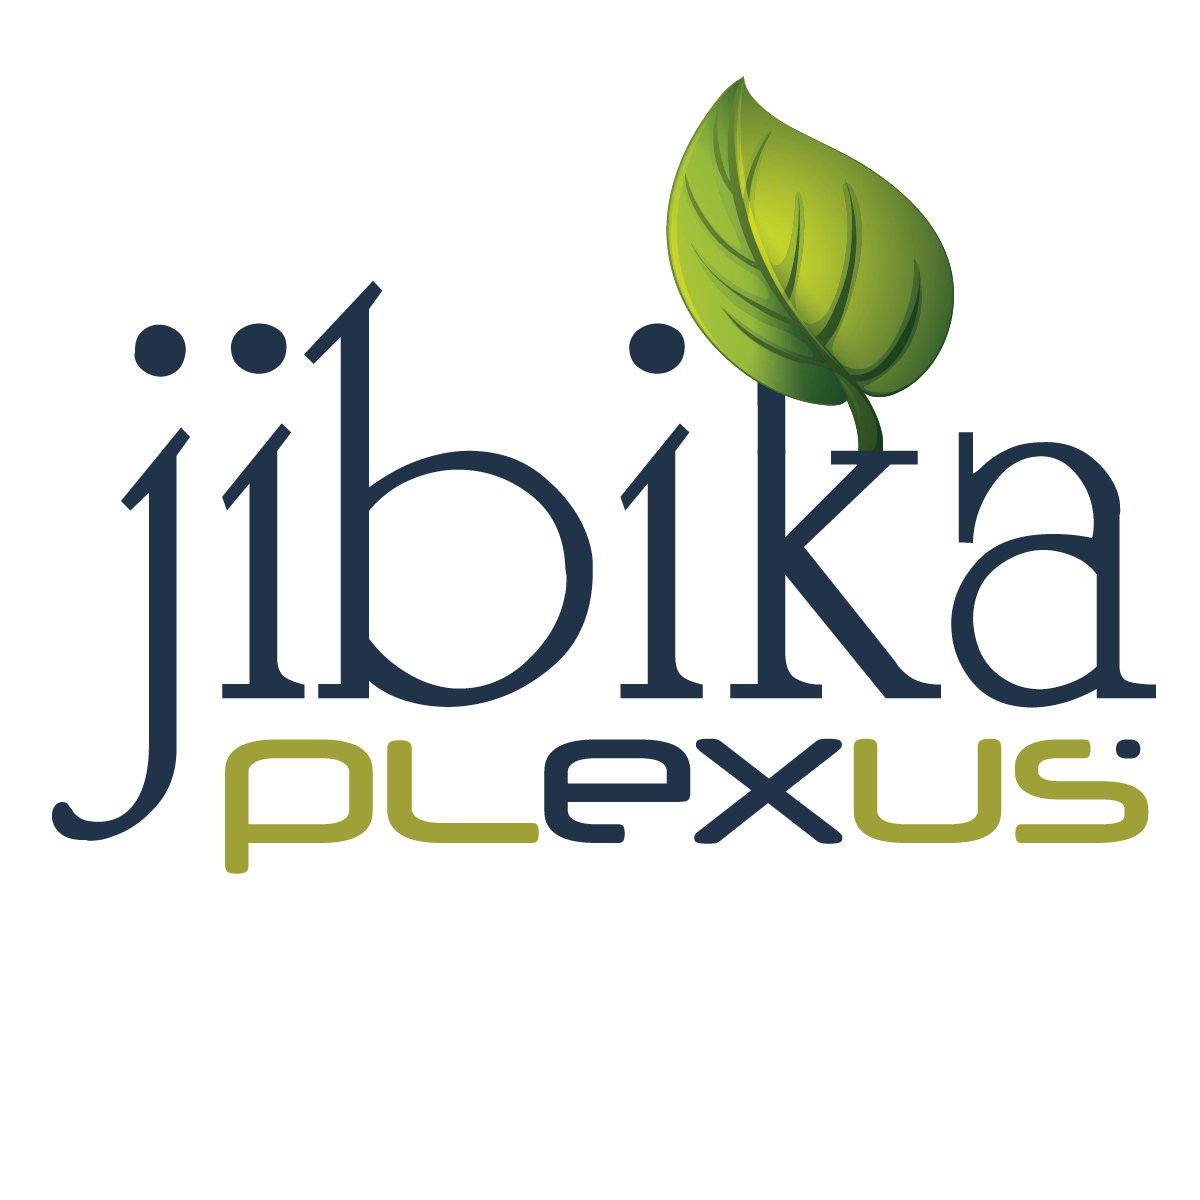 Jibika Plexus is the best payroll software in Bangladesh